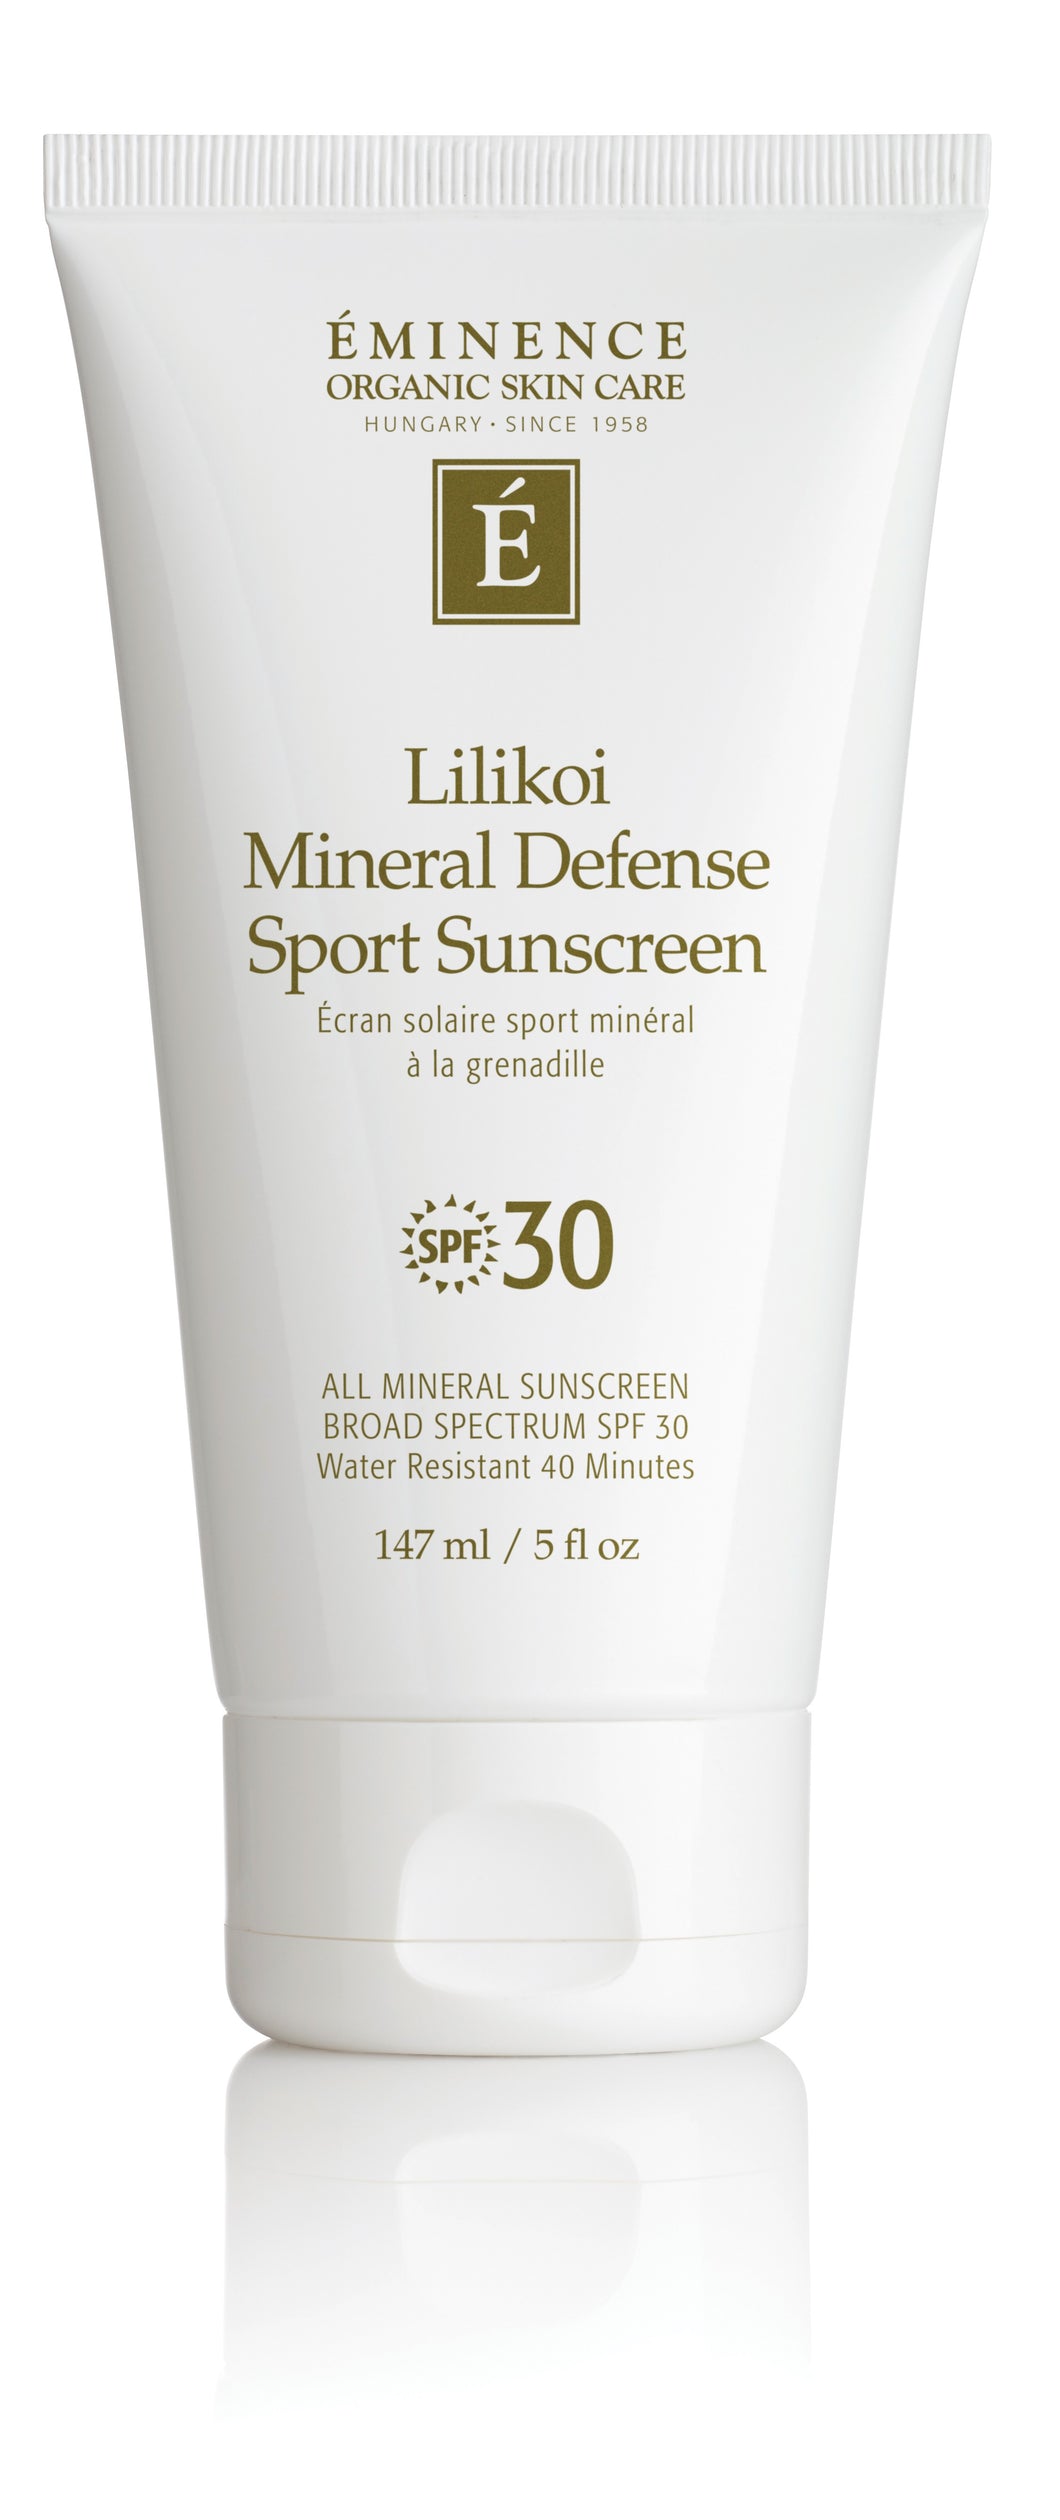 Eminence: Lilikoi Mineral Defense Sport Sunscreen SPF 30